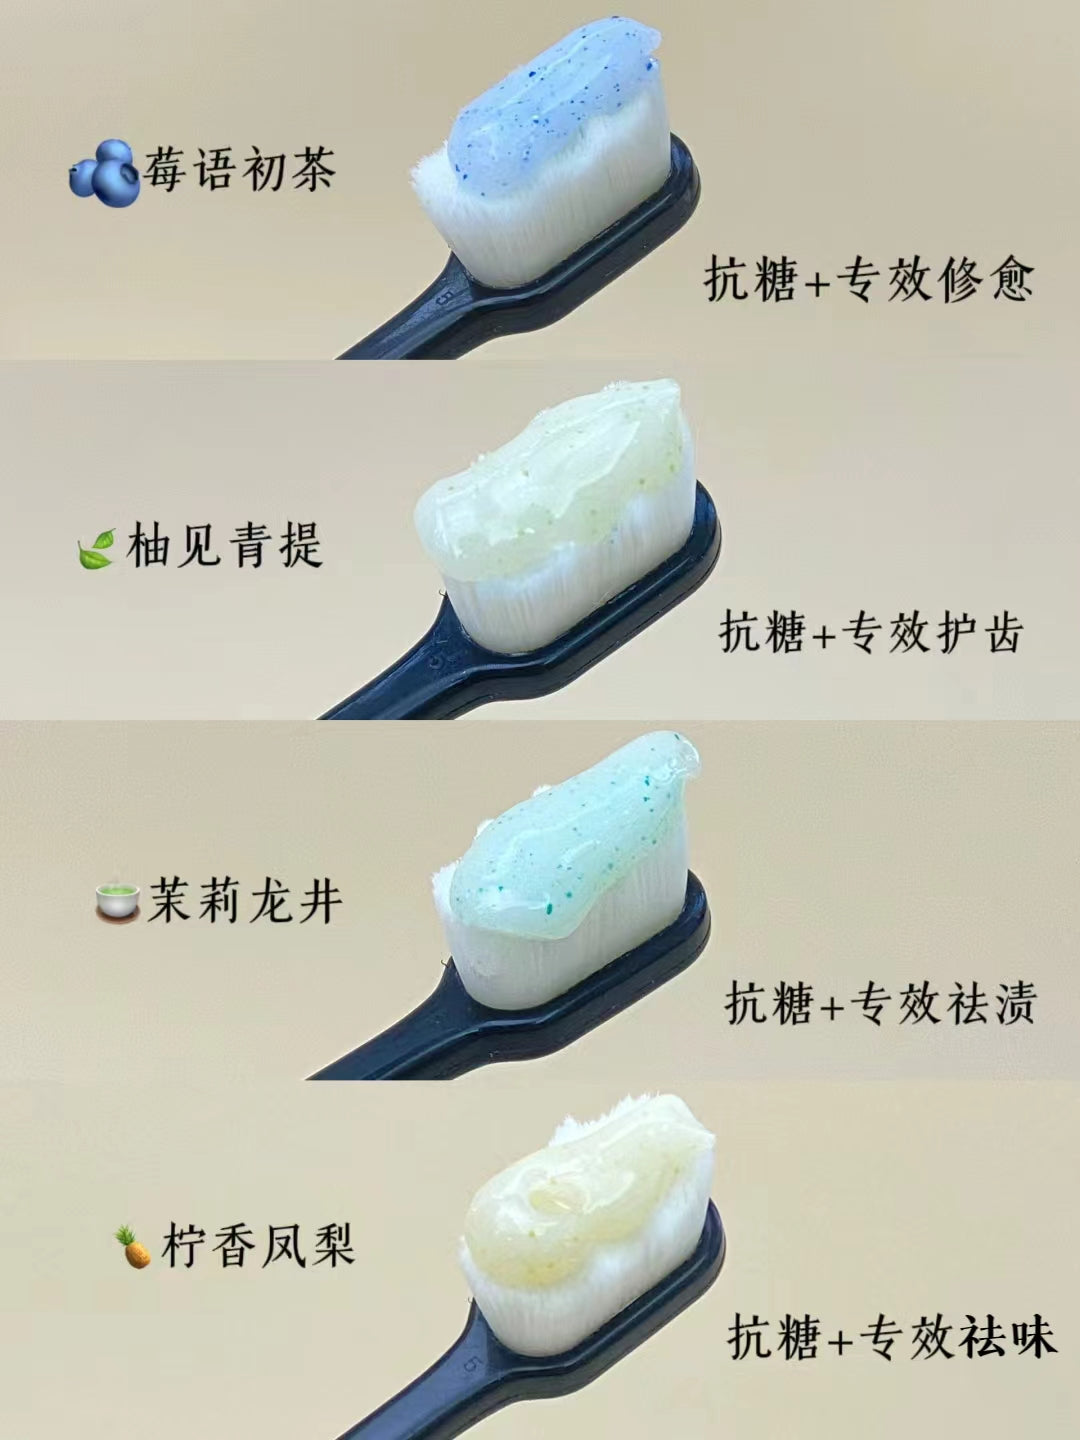 ECOOBIX Amino Acid Anti-Sugar Toothpaste 75g 白惜氨基酸抗糖牙膏